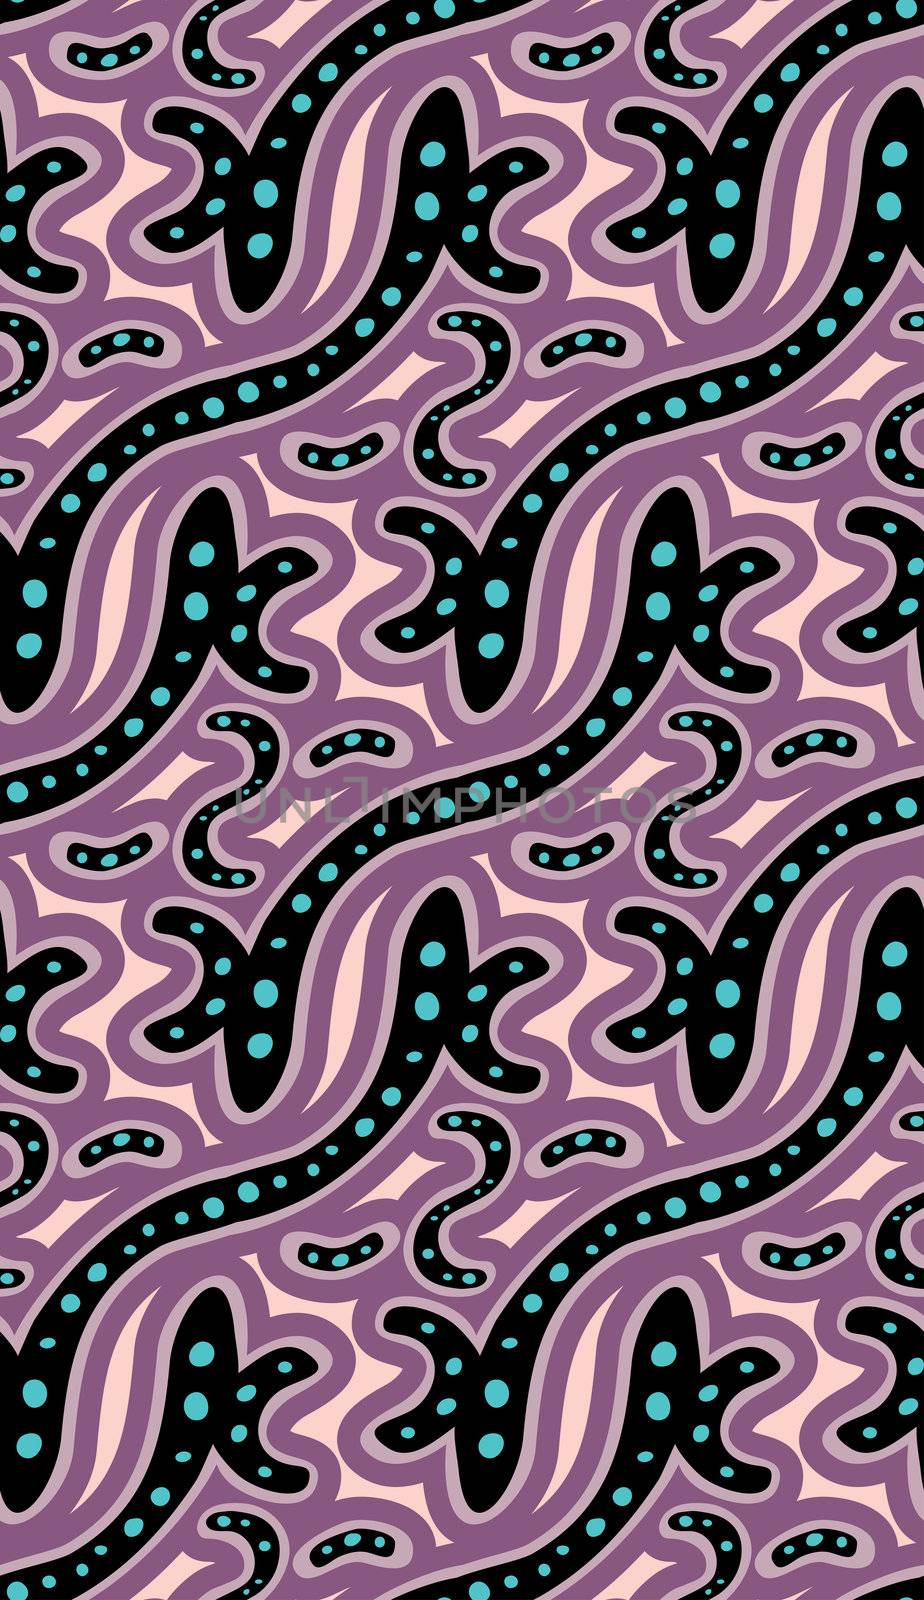 Seamless wallpaper background of salamander-like organic patterns